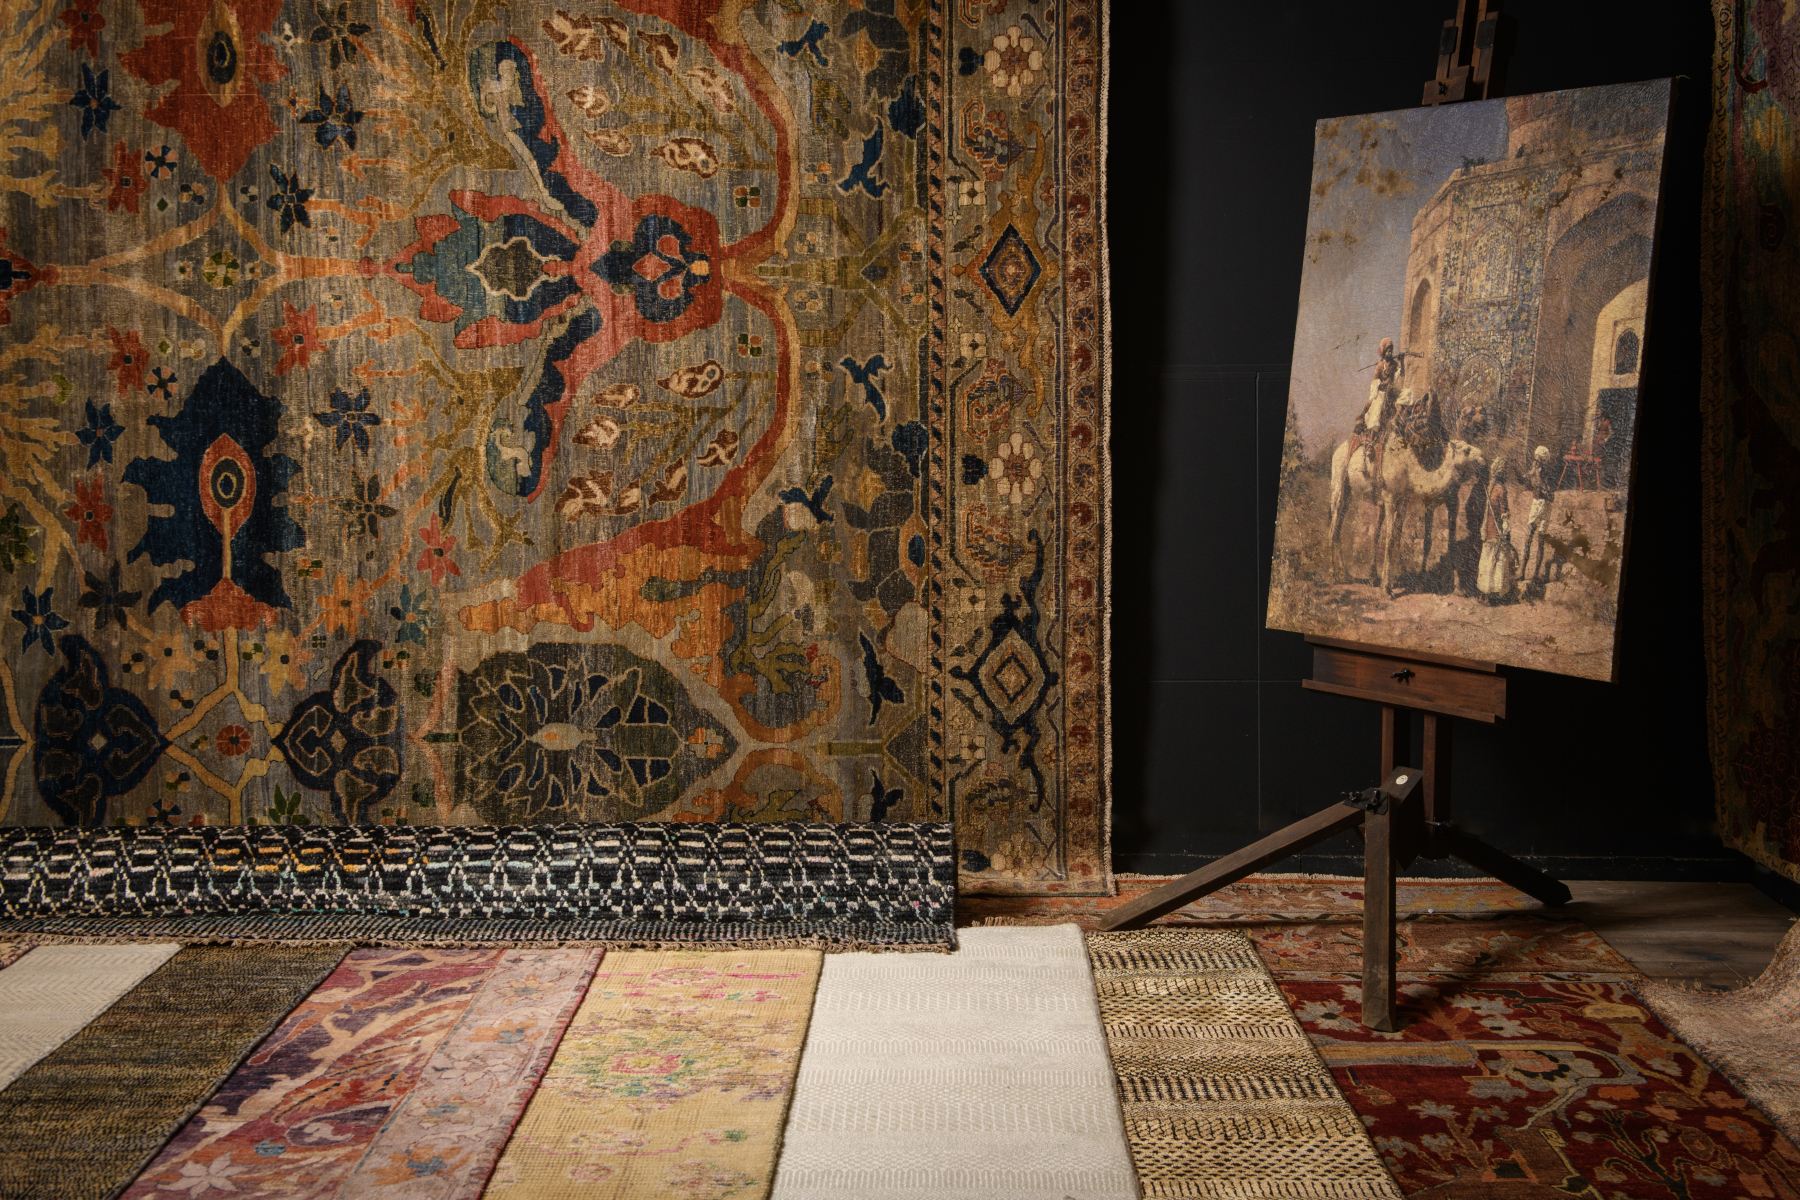 Lapicida Showroom features luxury rugs